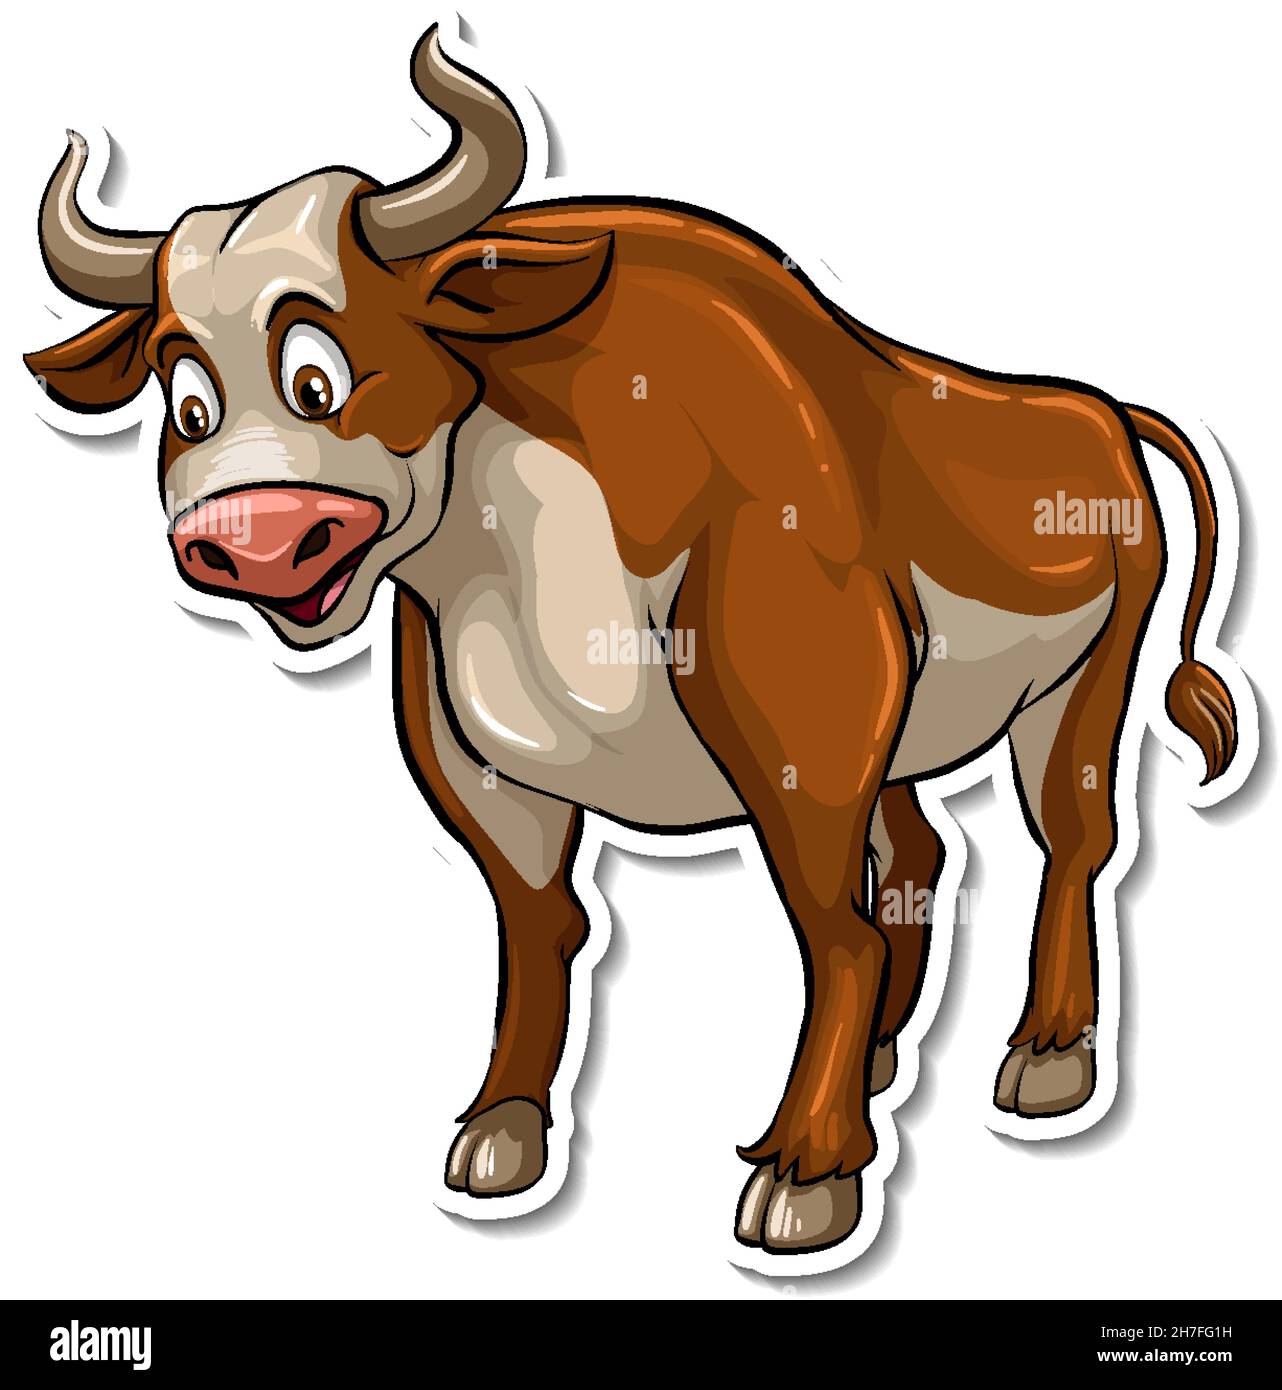 Bull animal cartoon sticker illustration Stock Vector Image & Art - Alamy